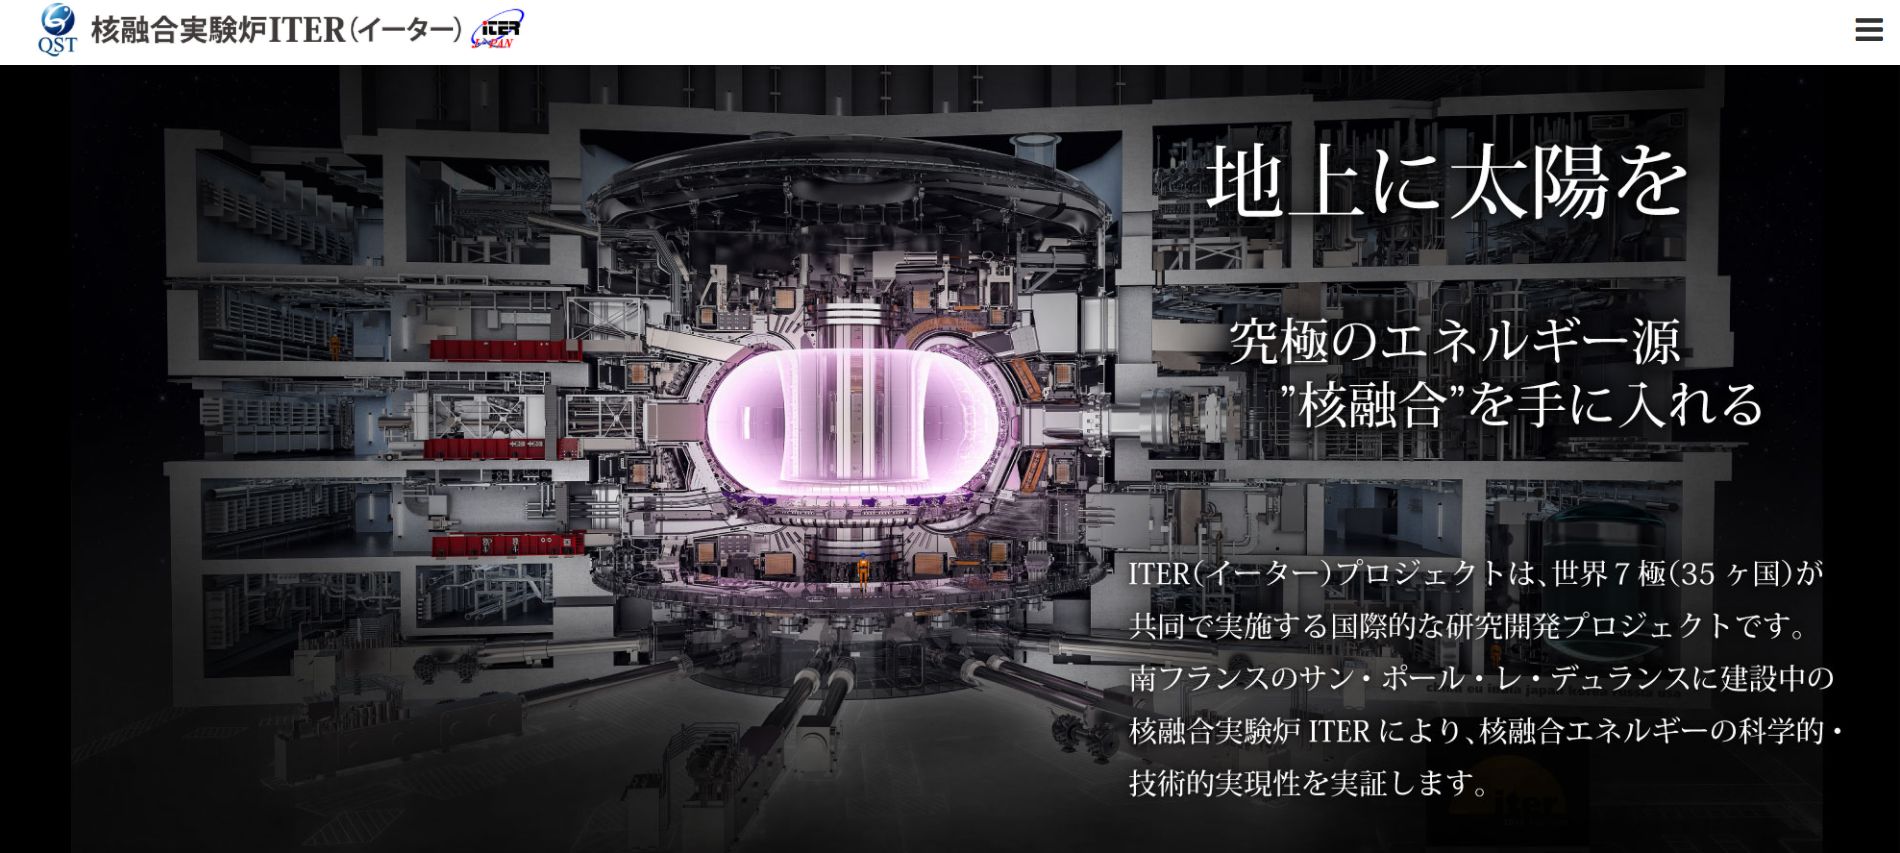 ITER Japan「一般の方へ」